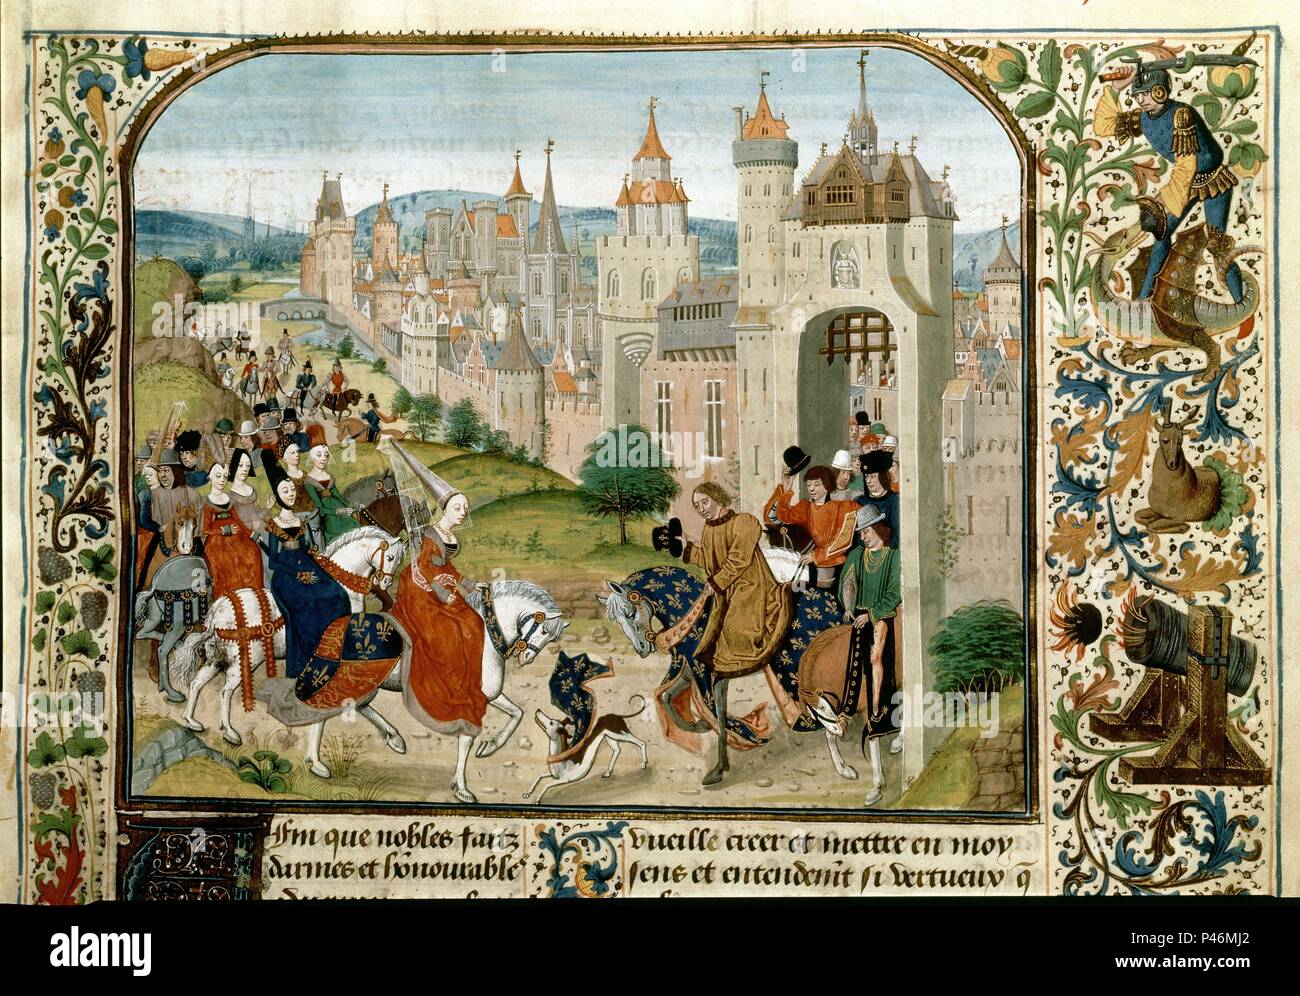 CARLOS IV FRANCIA RECIBE A LA REINA ISABEL DE INGLATERRA - 1325 - MANUSCRITO GOTICO. Author: Jean Froissart (c. 1333-c. 1410). Location: NATIONAL LIBRARY. Stock Photo